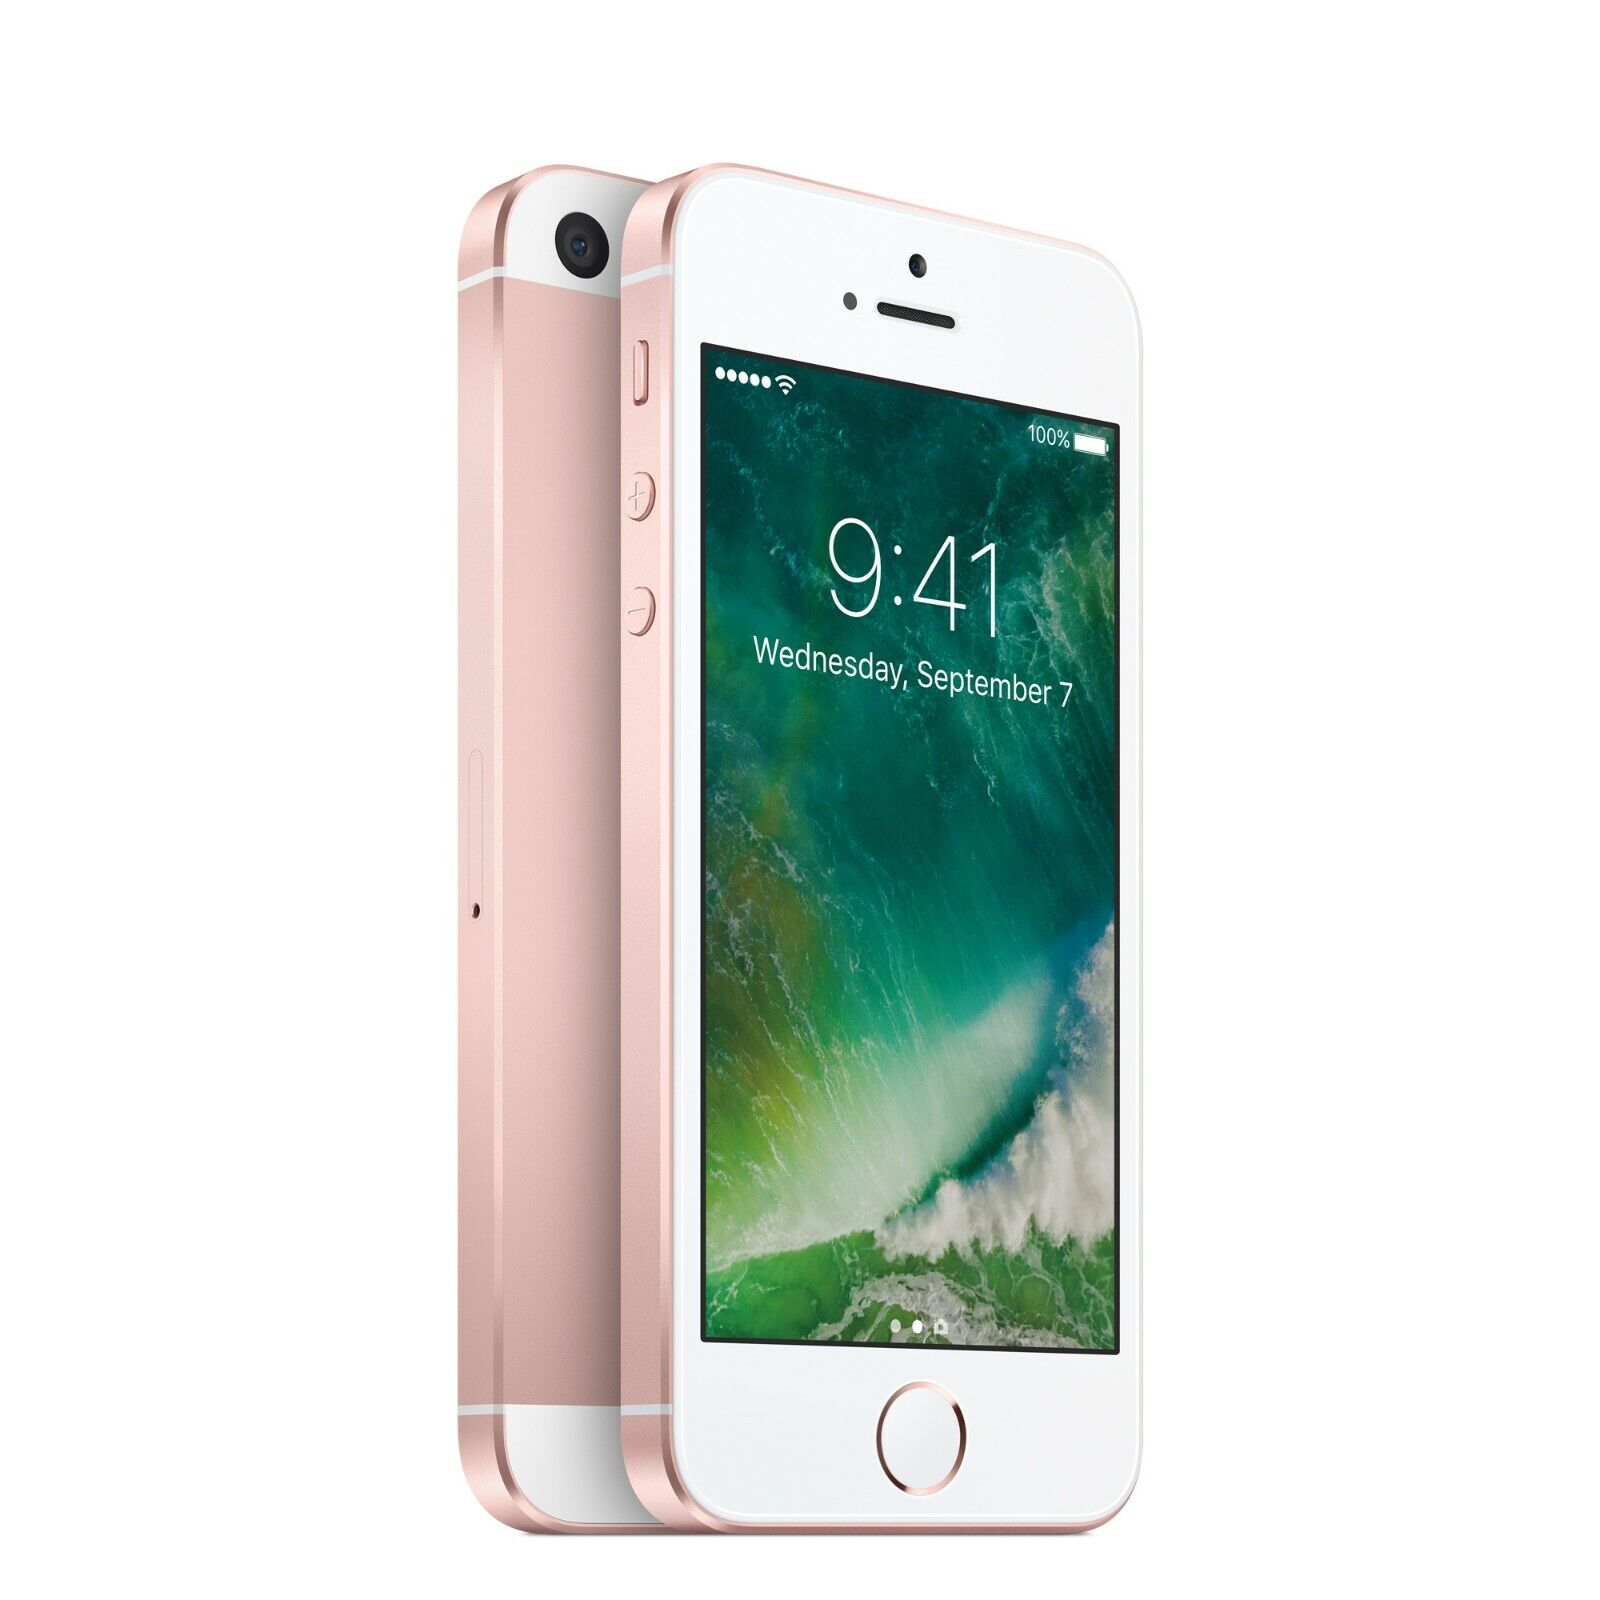 Apple iPhone SE - 32GB - Rose Gold (Straight Talk) A1662 (CDMA +